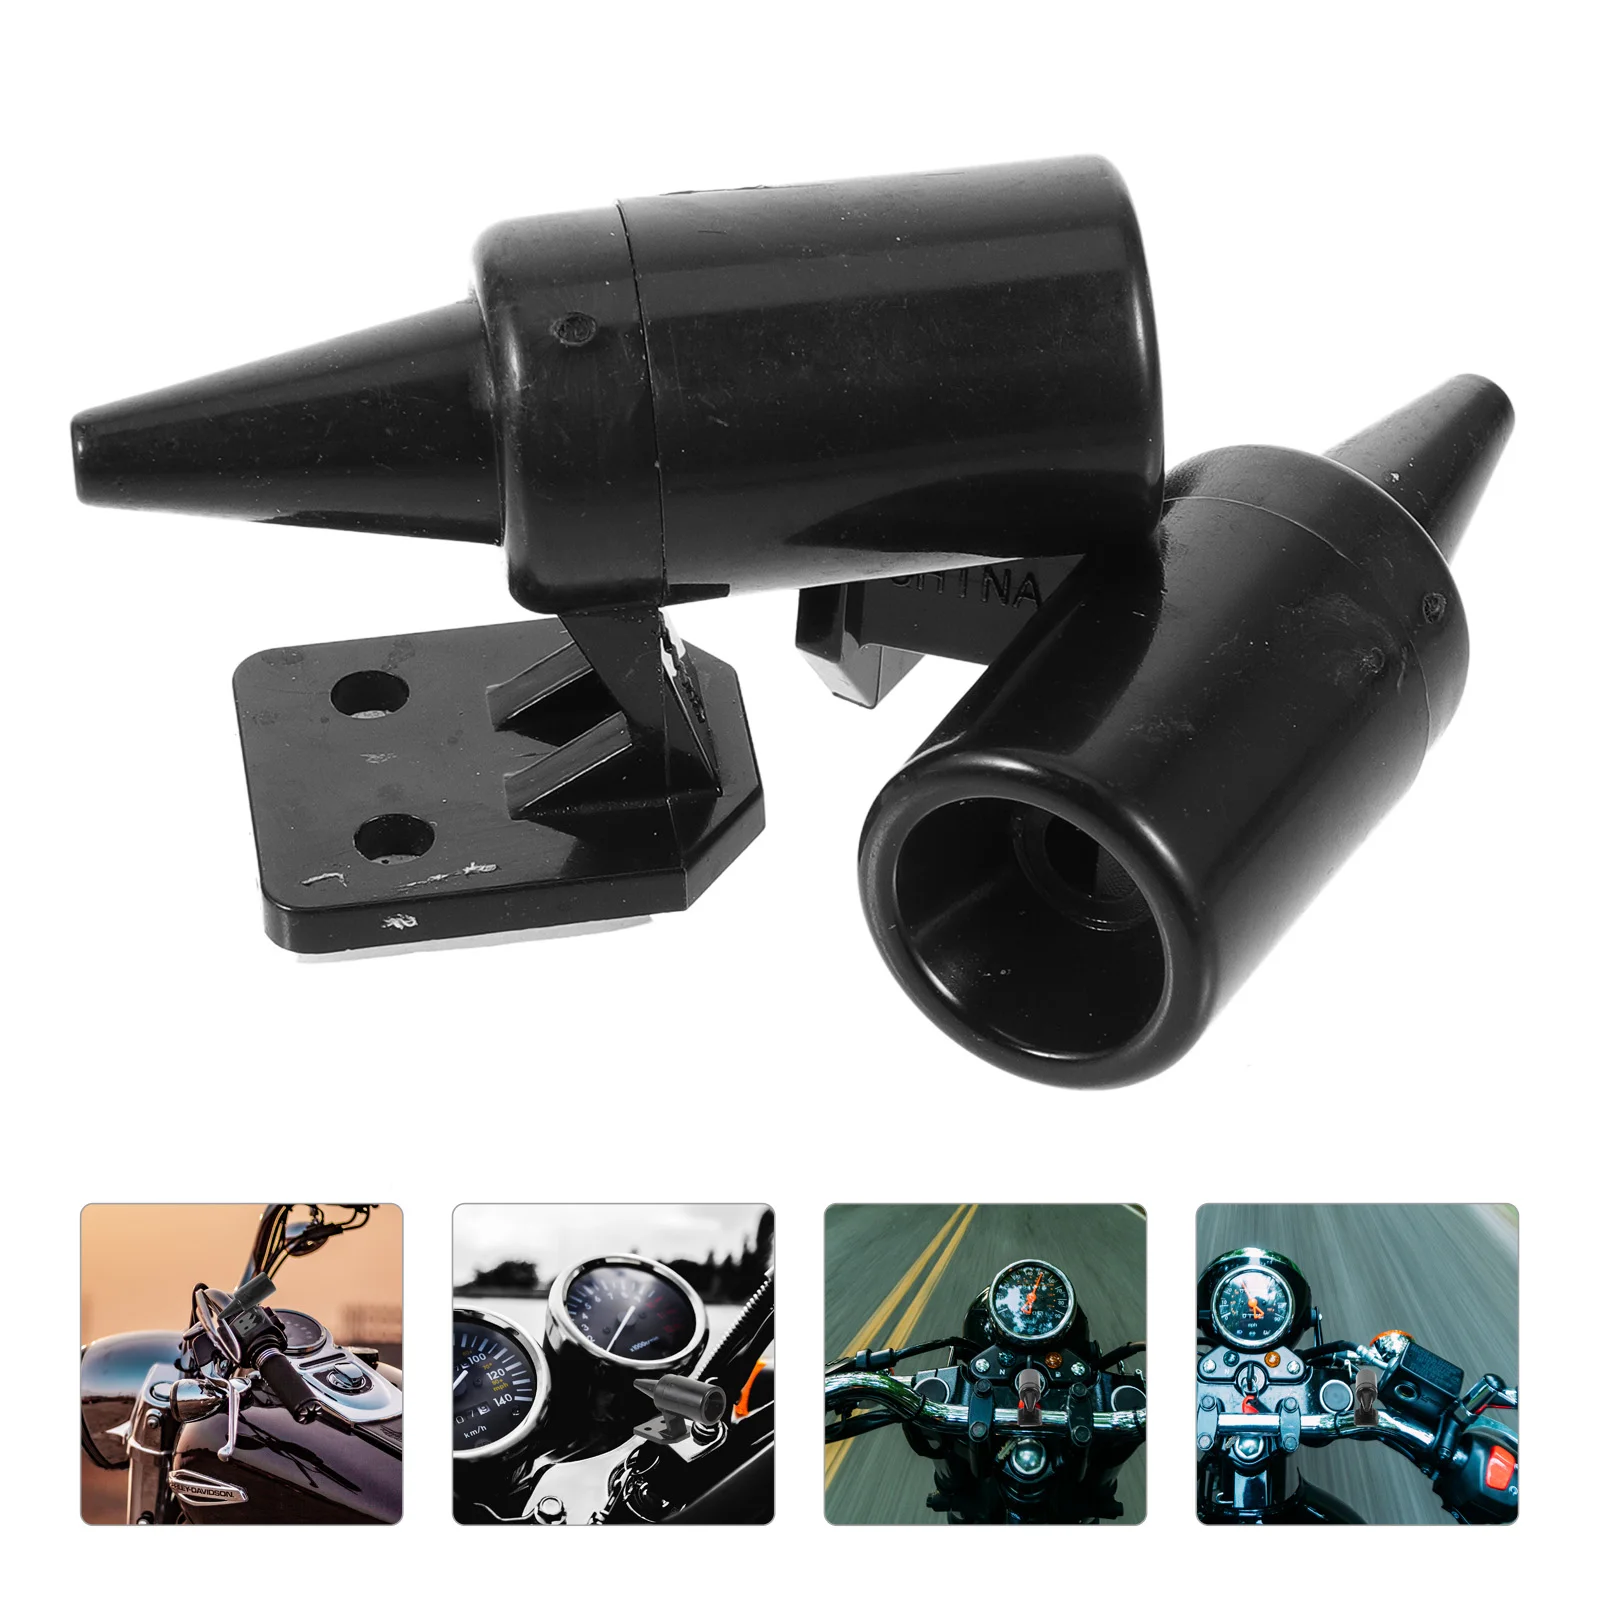 

Deer Whistle Horn Car Safety Kit Automotive Whistles Deterrent Warning Devices Boat Plastic